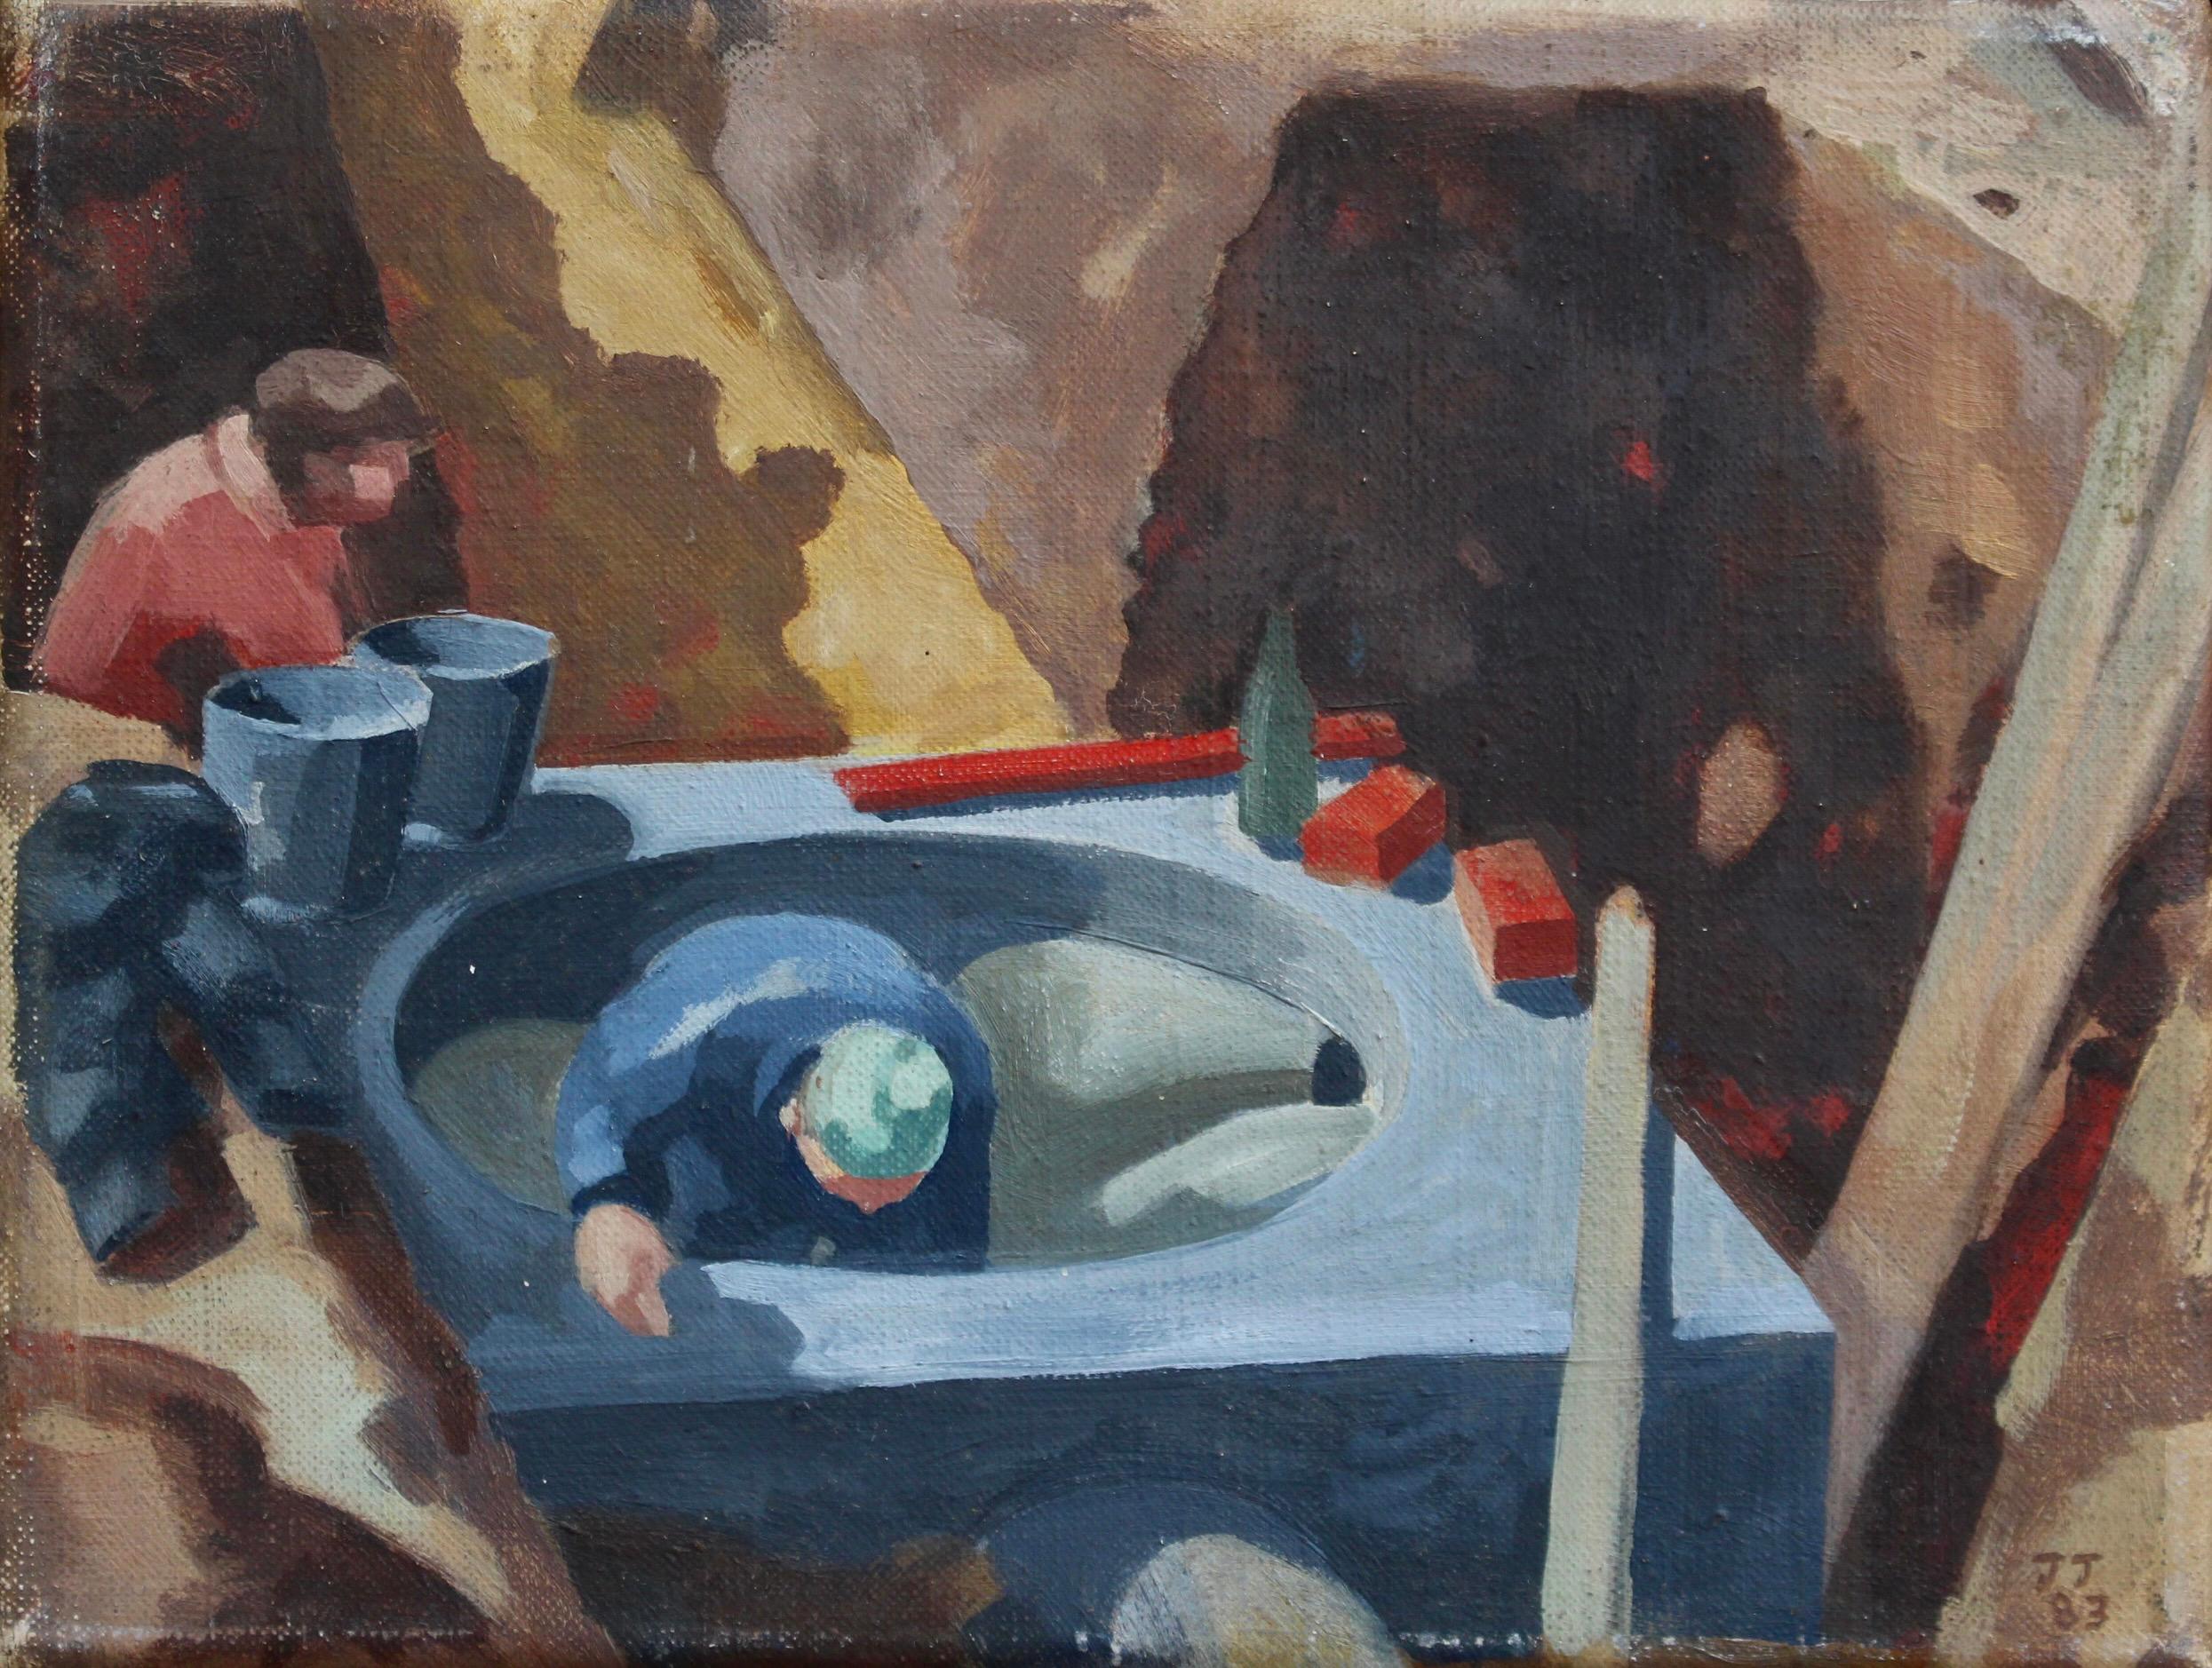 John James Portrait Painting - Two Men and a Manhole